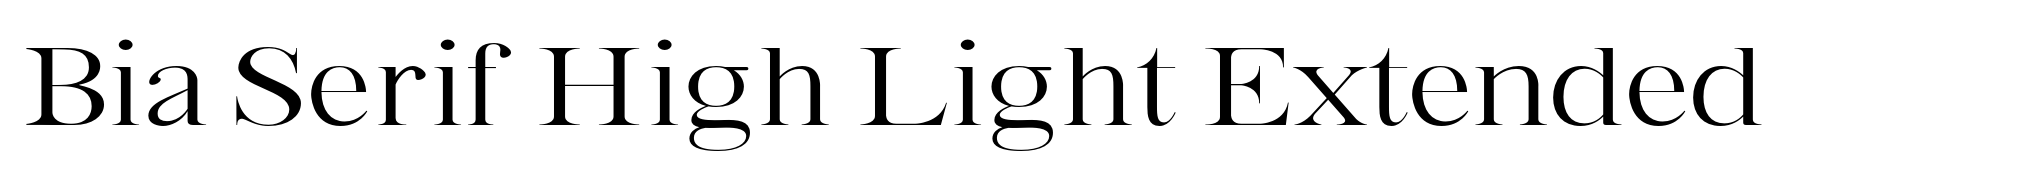 Bia Serif High Light Extended image